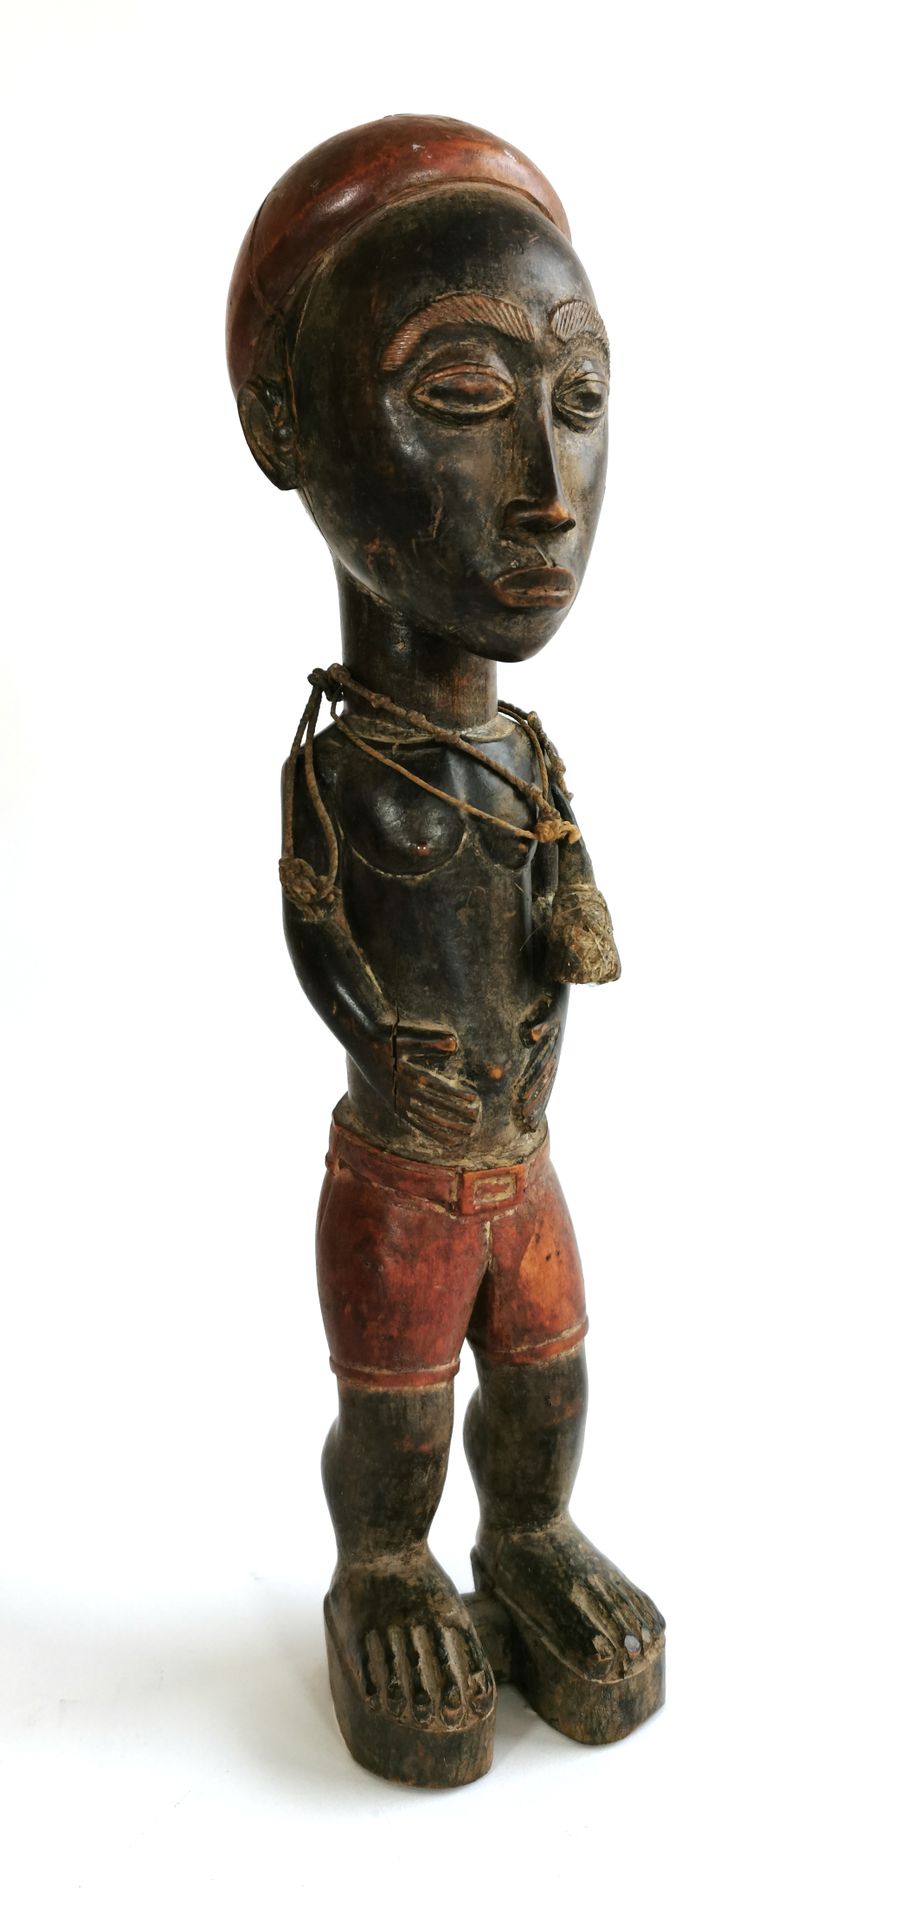 Null BAOULÉ（象牙海岸

多色雕刻的木雕像

H.39厘米